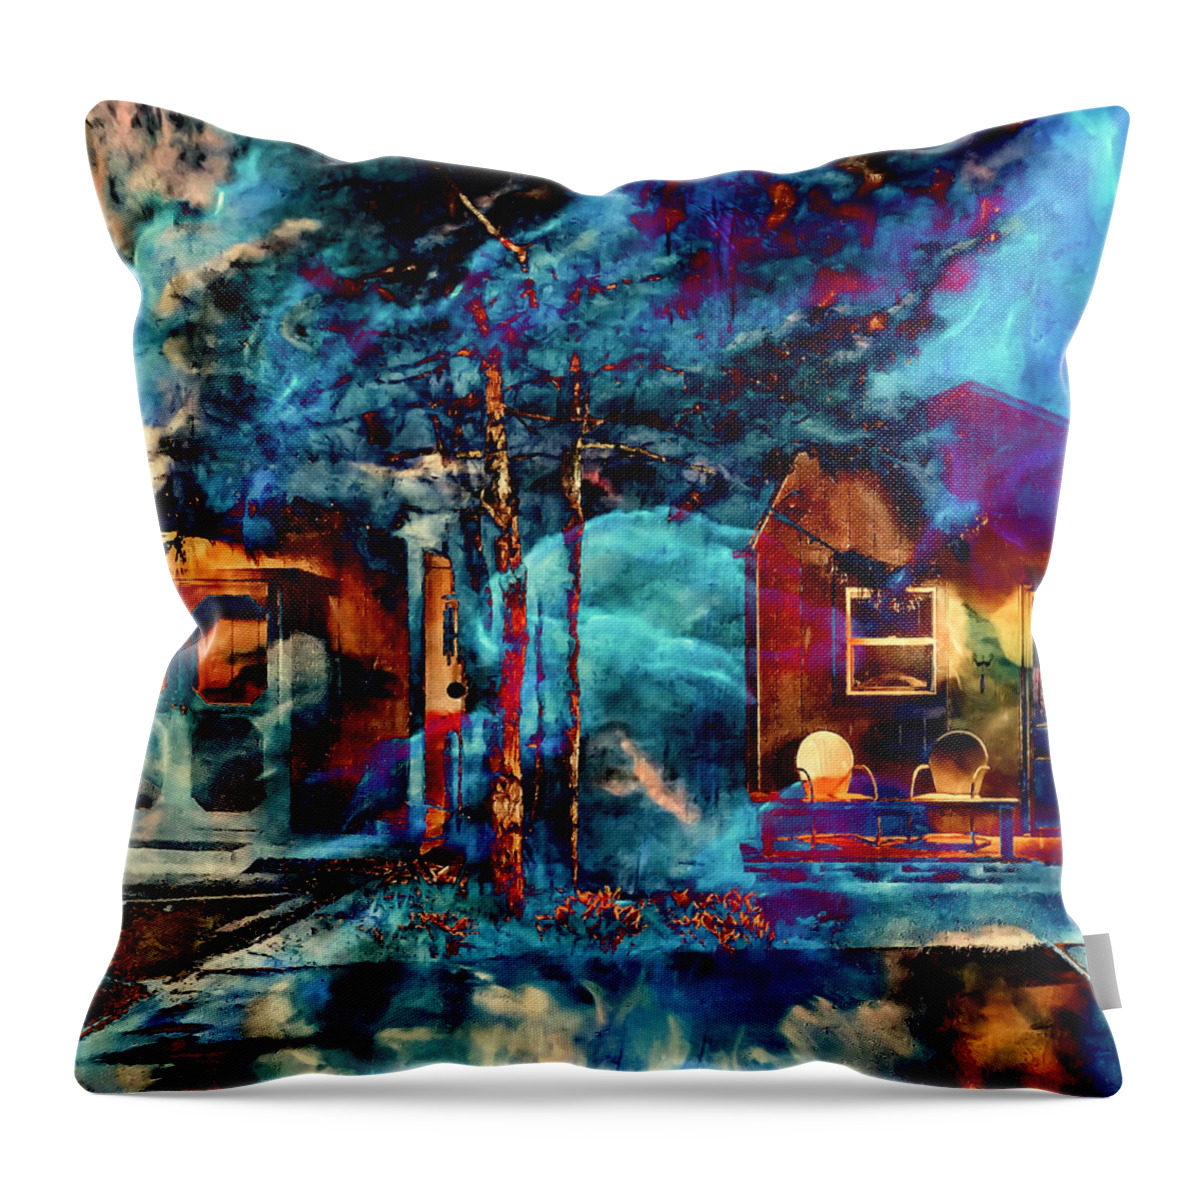 Digital Throw Pillow featuring the digital art Night Light by Theresa Marie Johnson